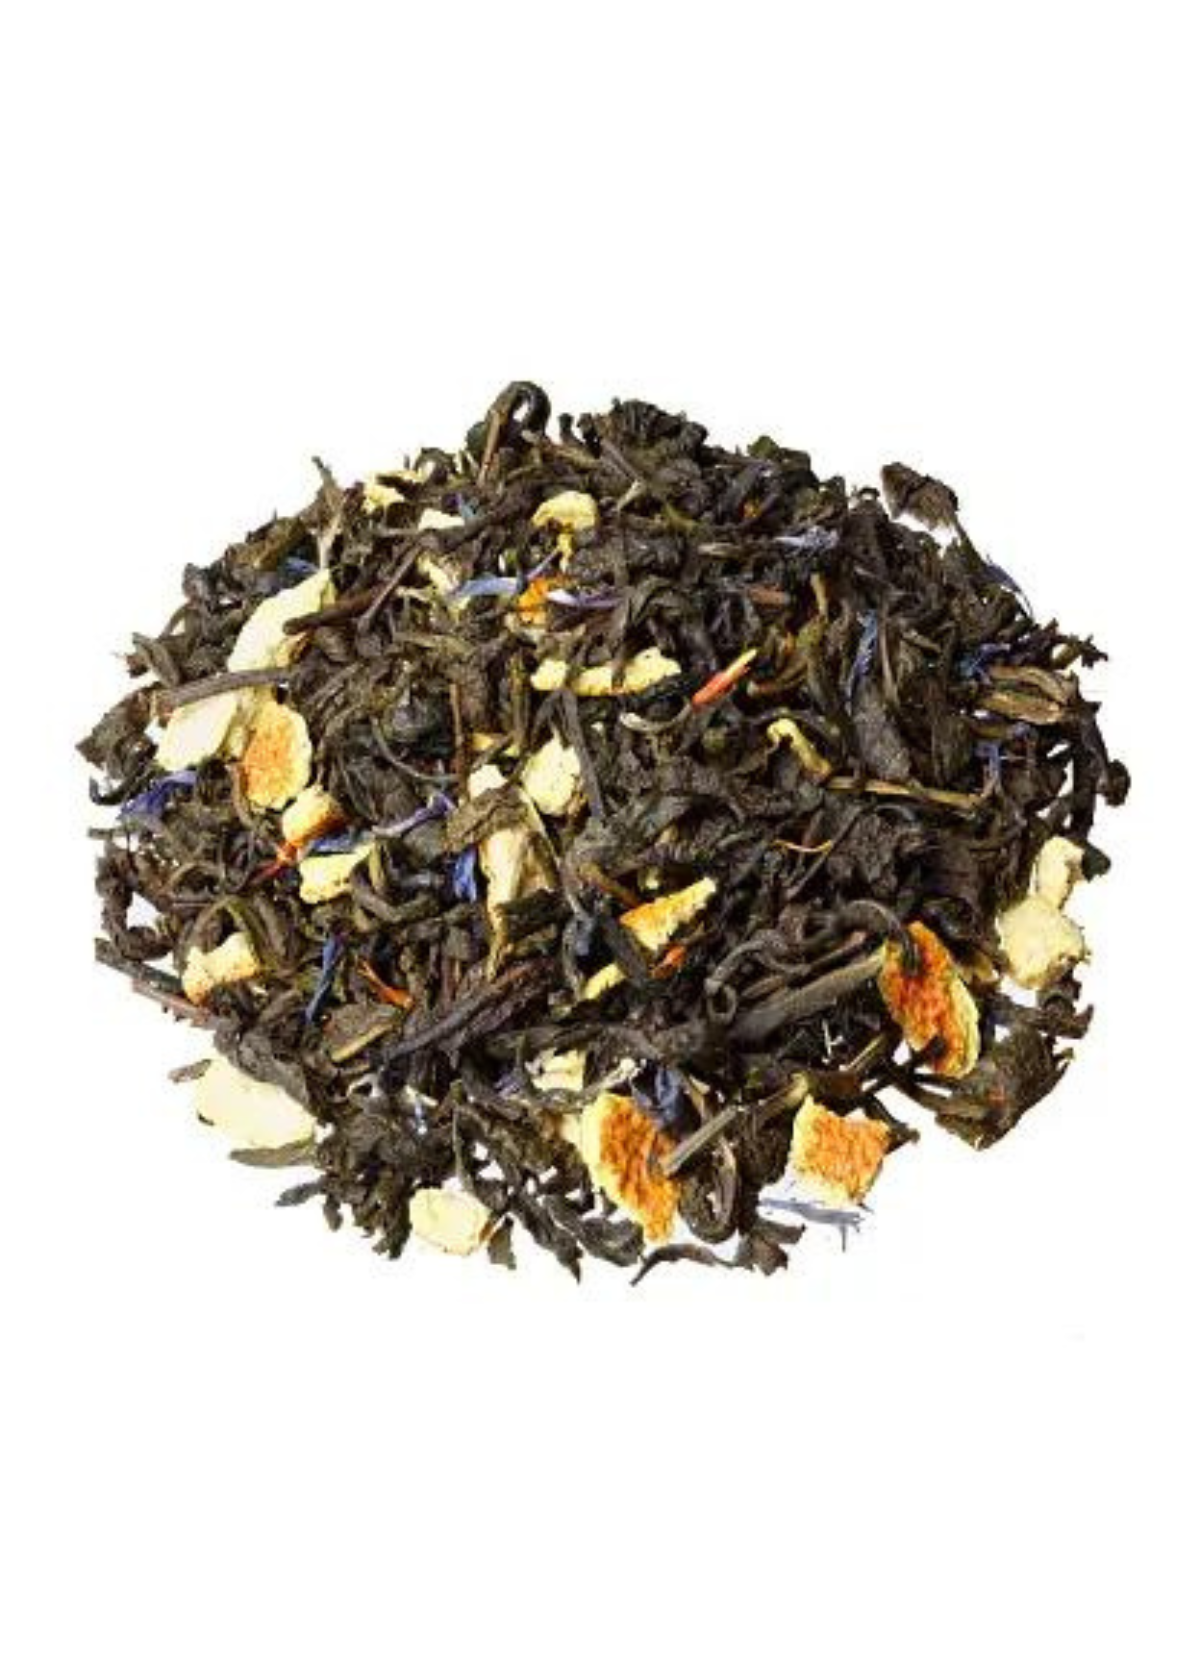 Enjoy a Refreshing Break with Our Best Earl Grey Tea